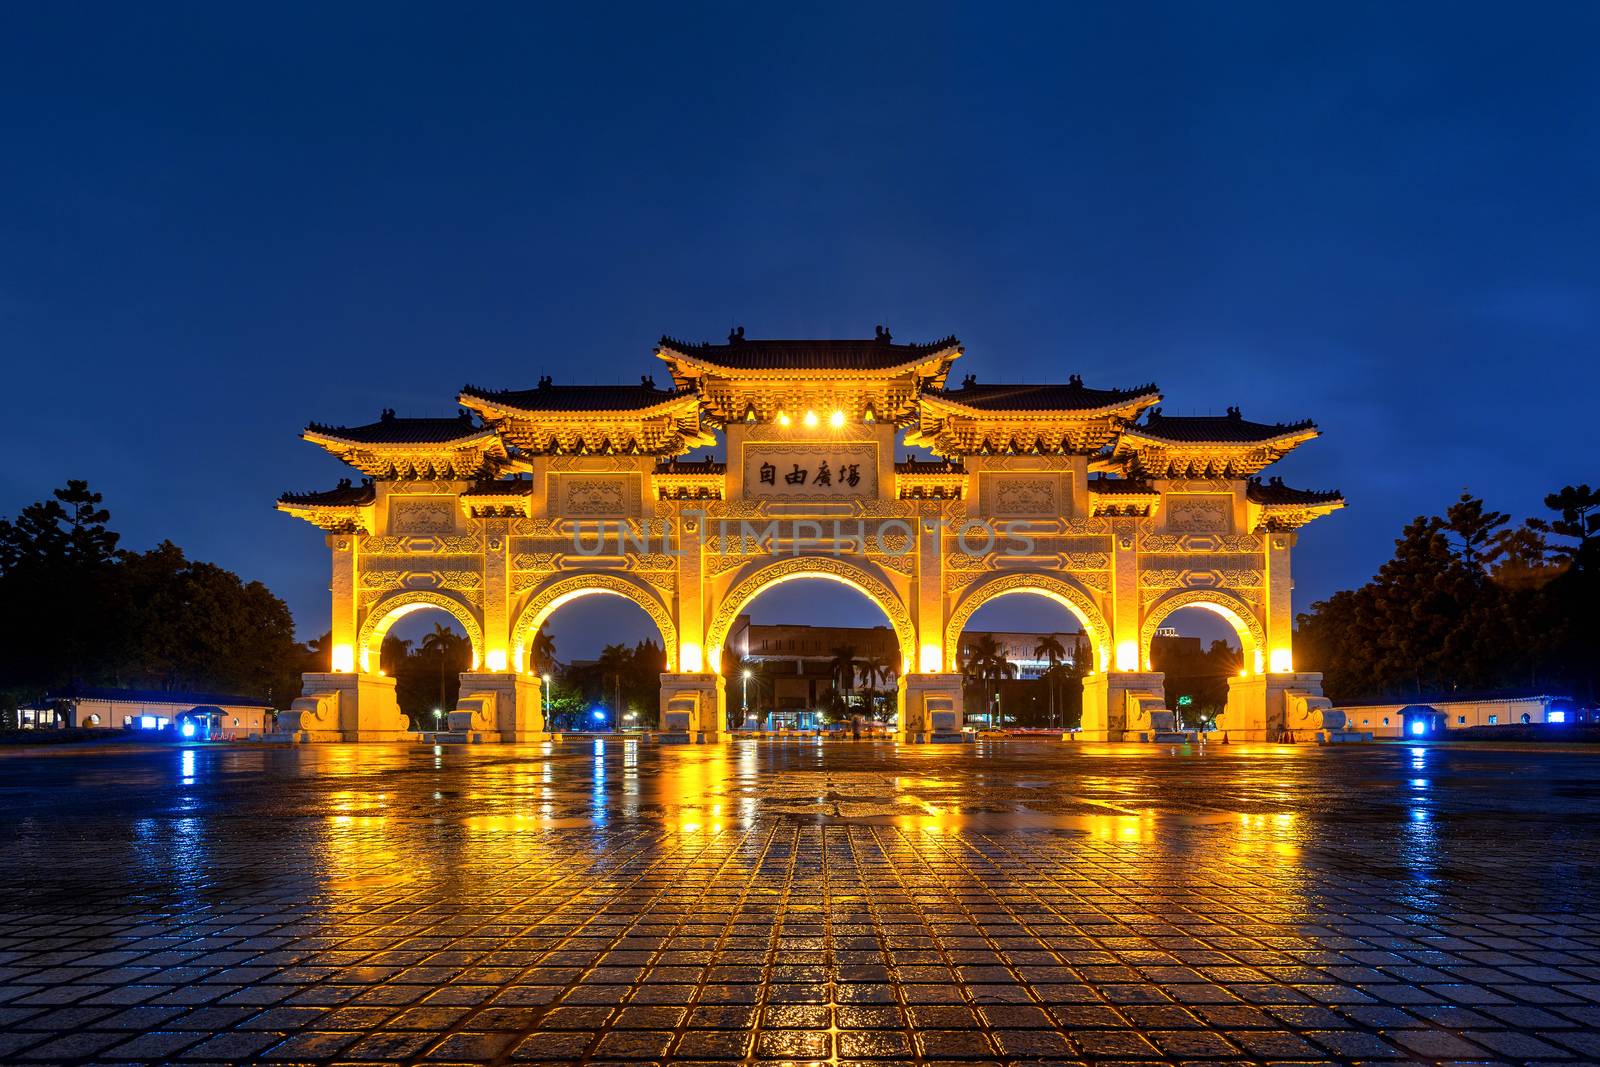 Chiang Kai Shek Memorial Hall at night in Taipei, Taiwan. Translation: "Liberty Square".